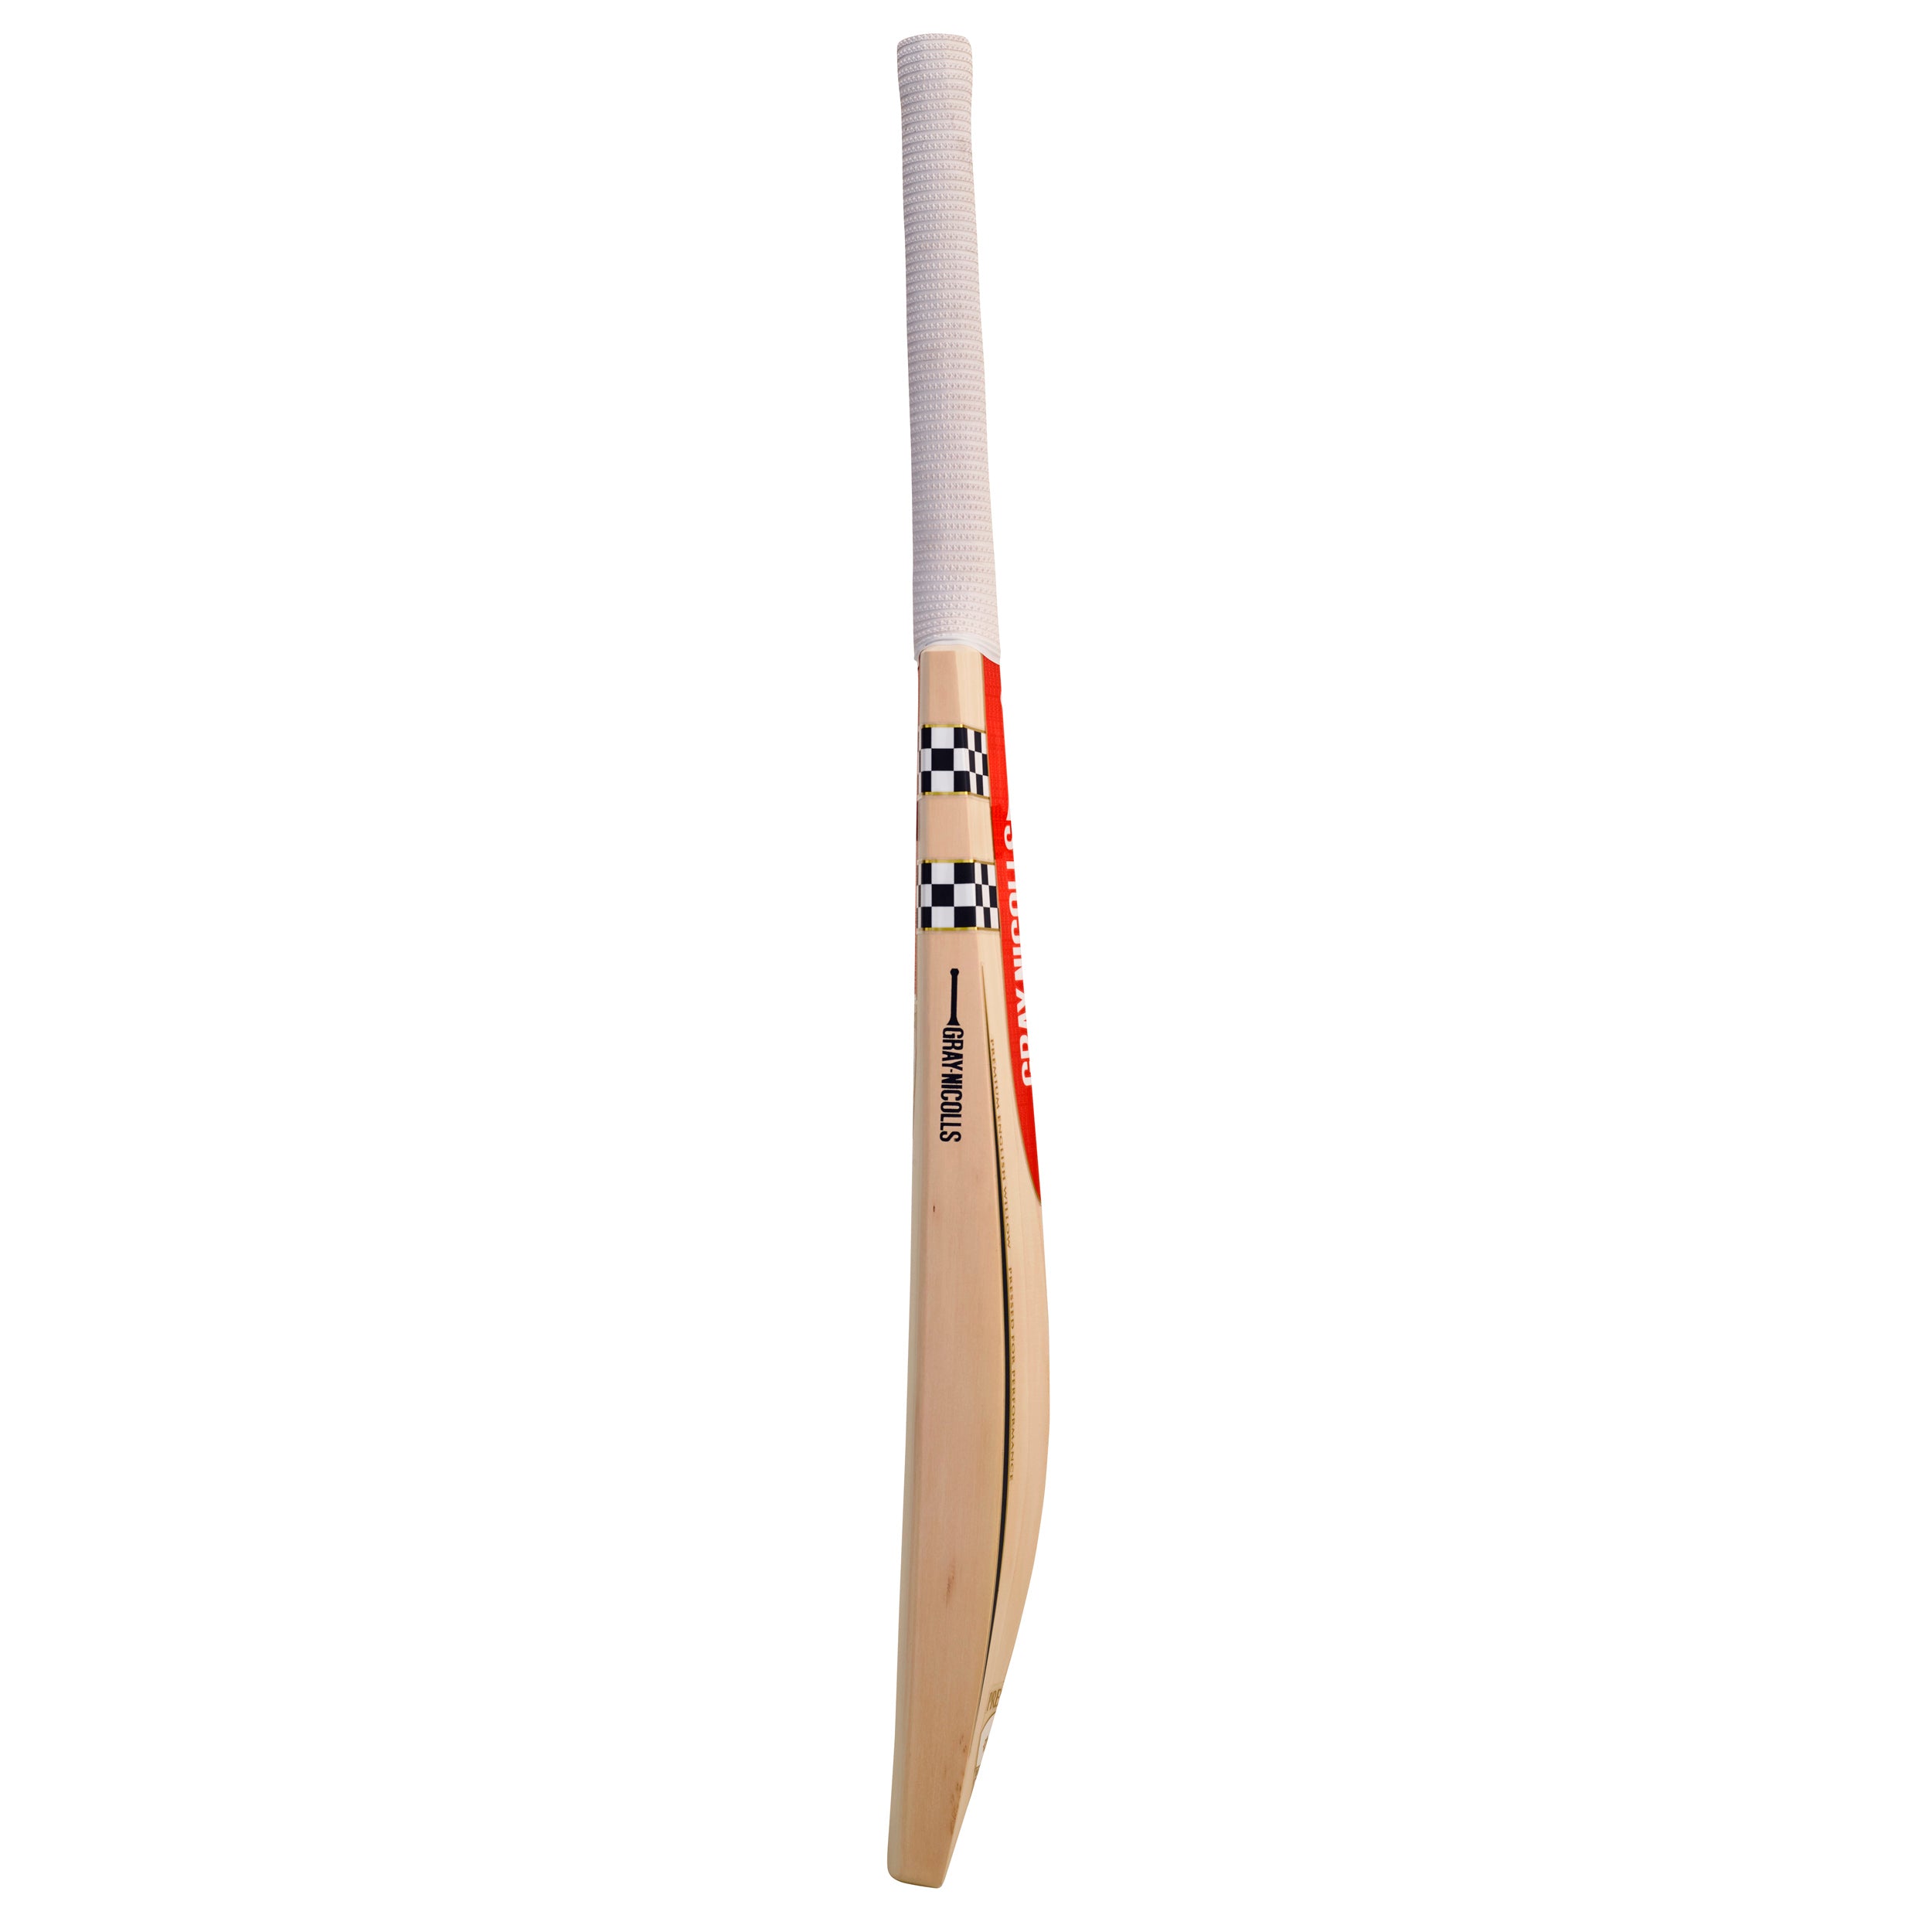 Gray-Nicolls Prestige Handcrafted Junior Cricket Bat